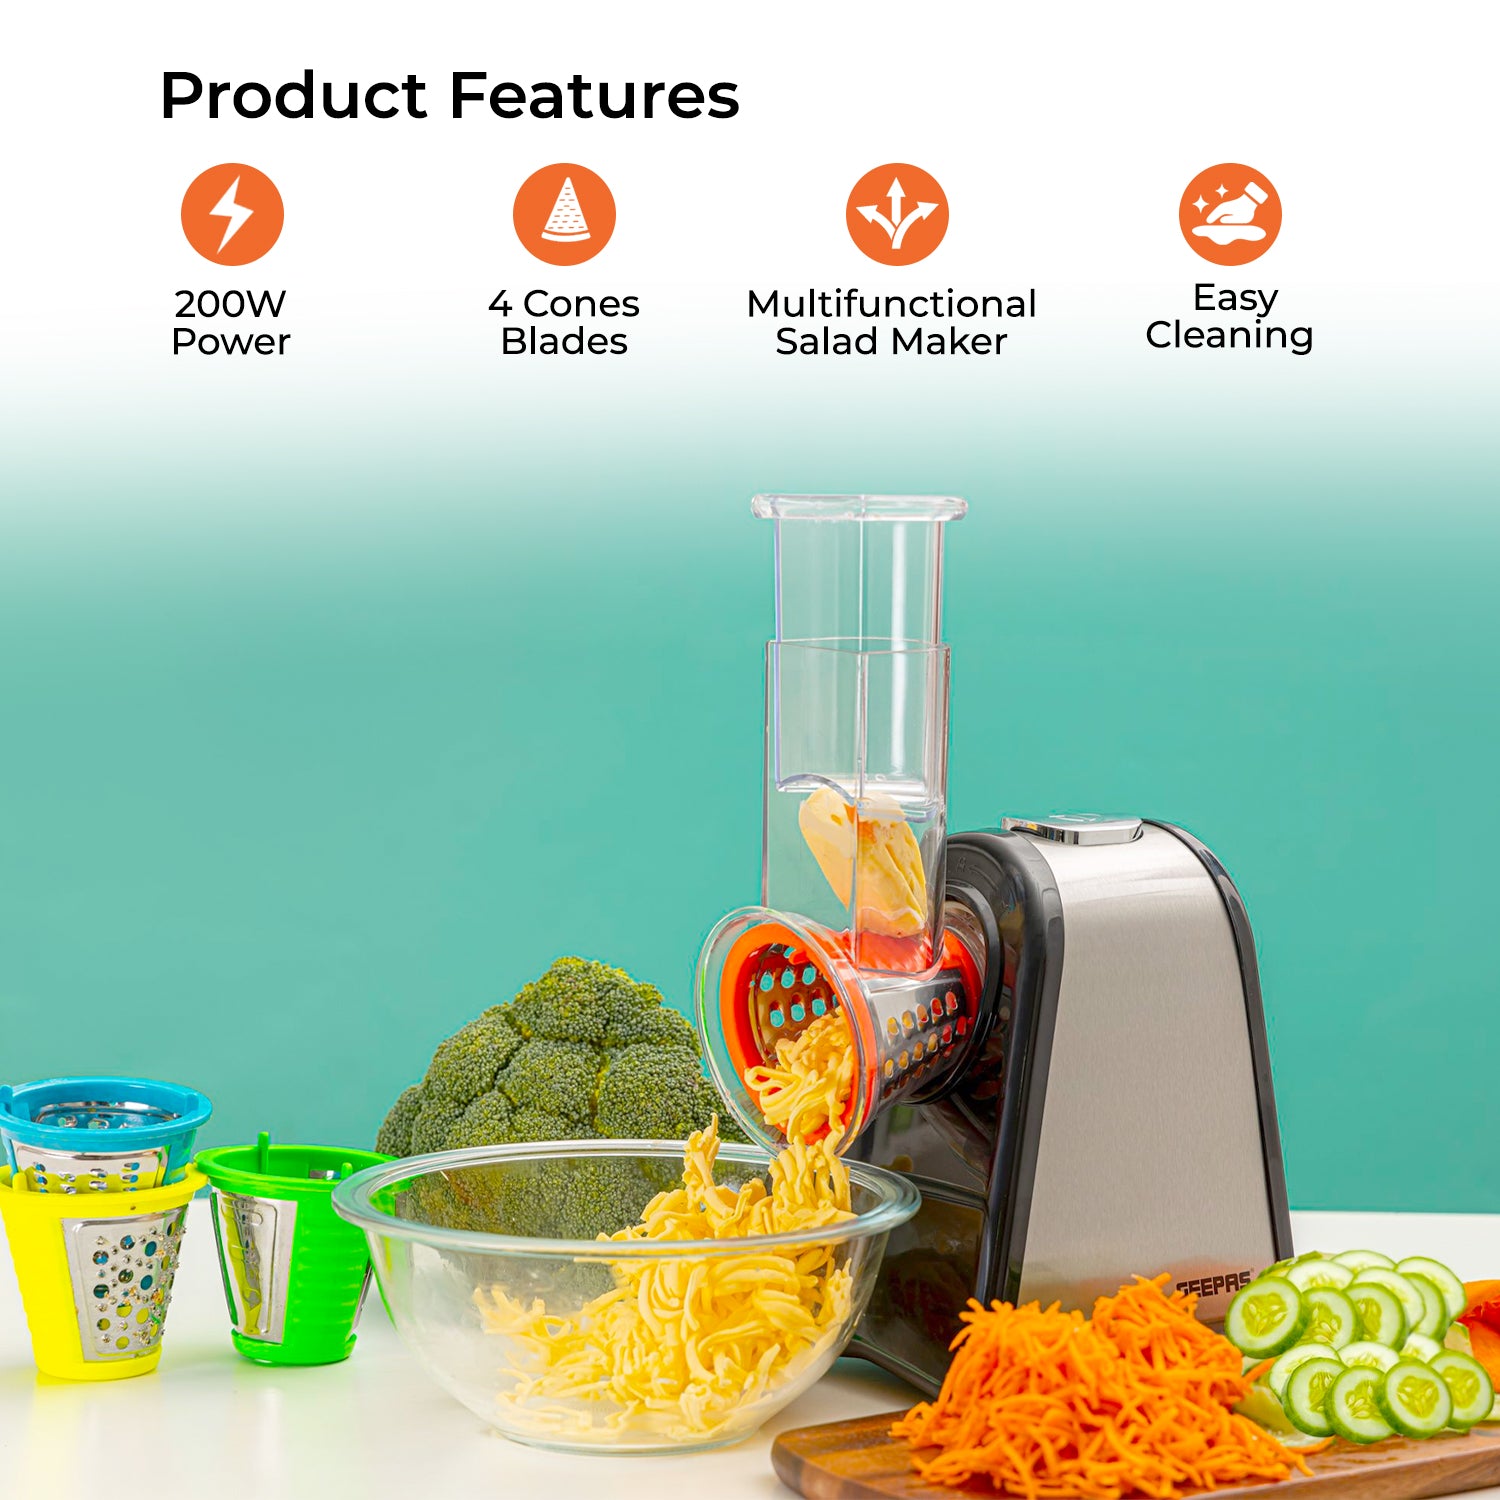 4-In-1 Multifunctional Salad Maker & Food Processor